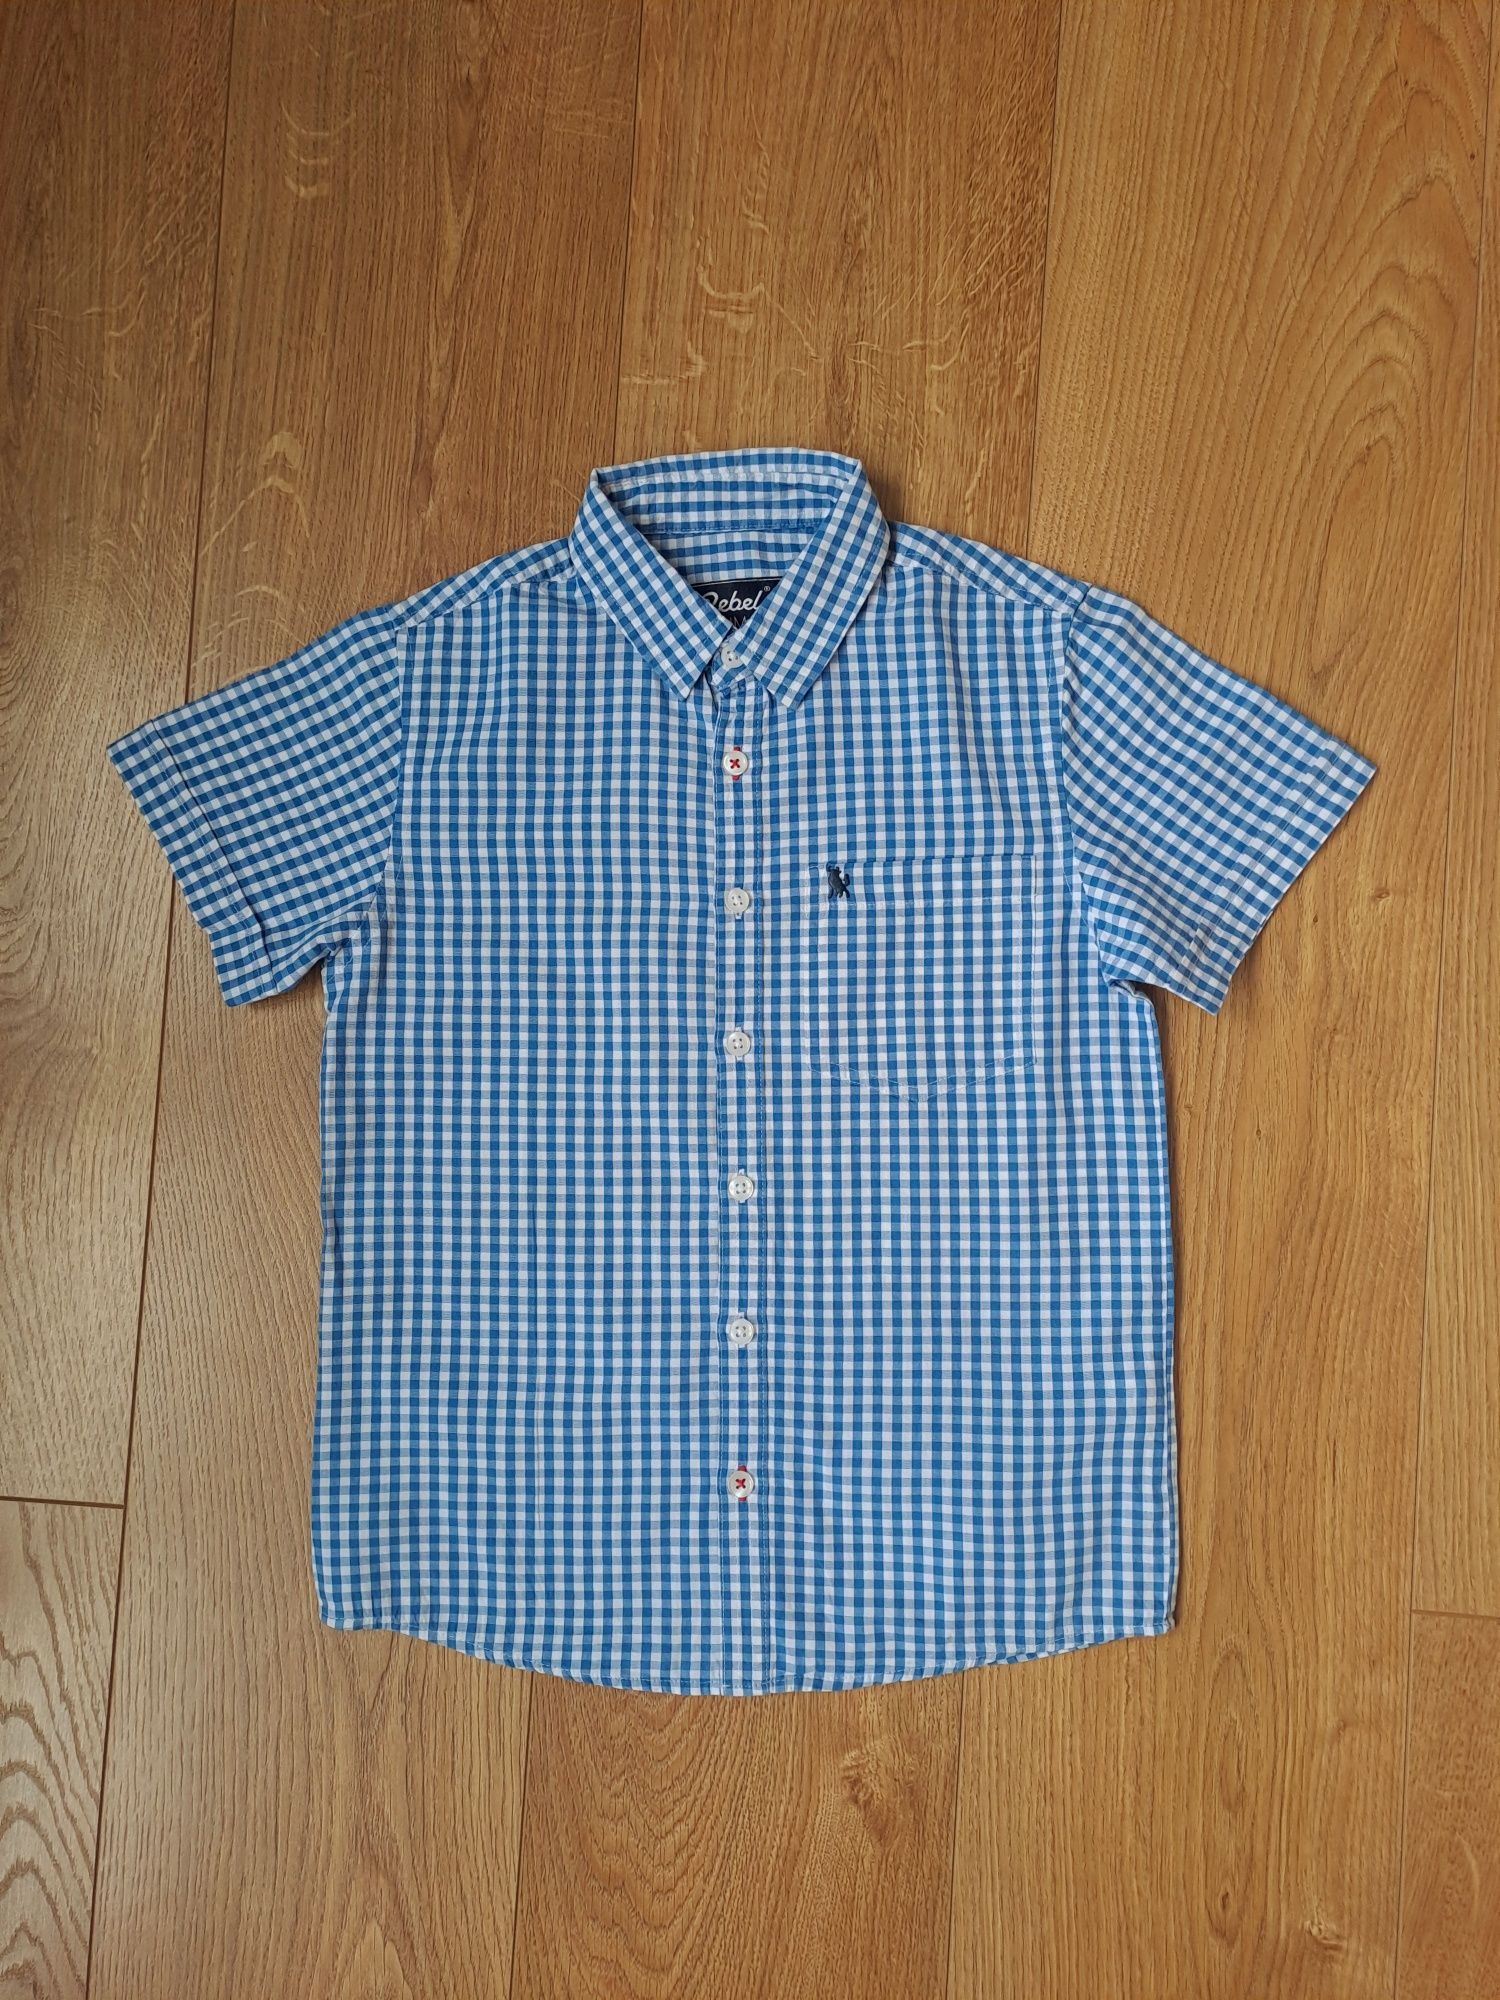 Летний набор для мальчика/шорты/рубашка с коротким рукавом/тенниска